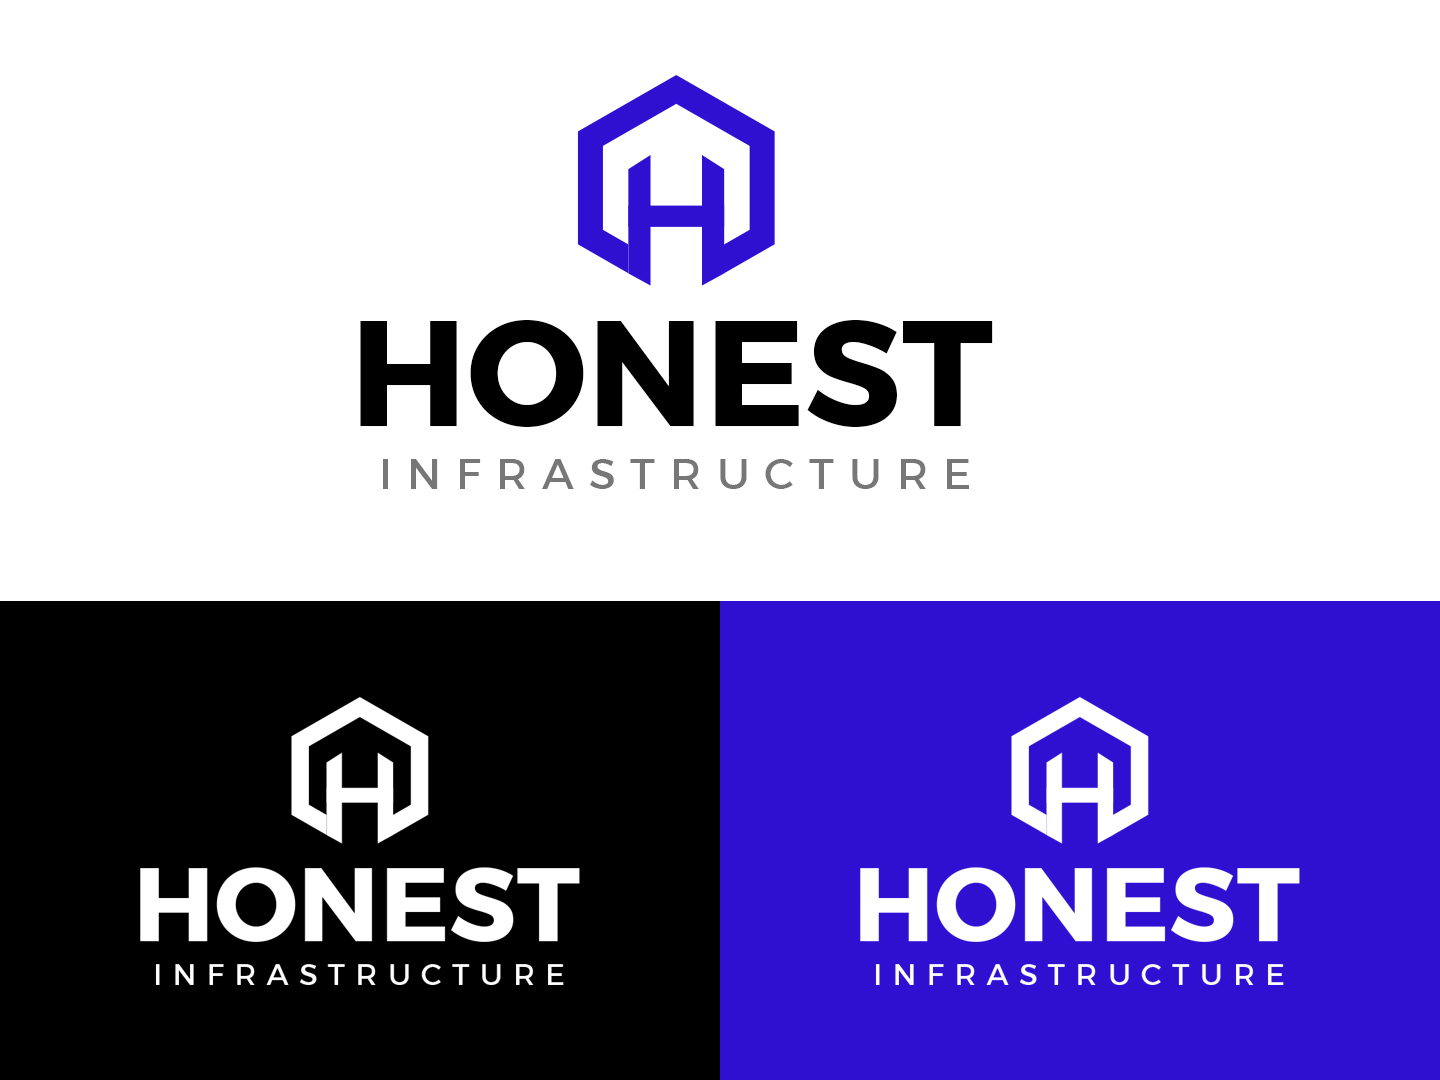 Honest logo, Vector Logo of Honest brand free download (eps, ai, png, cdr)  formats